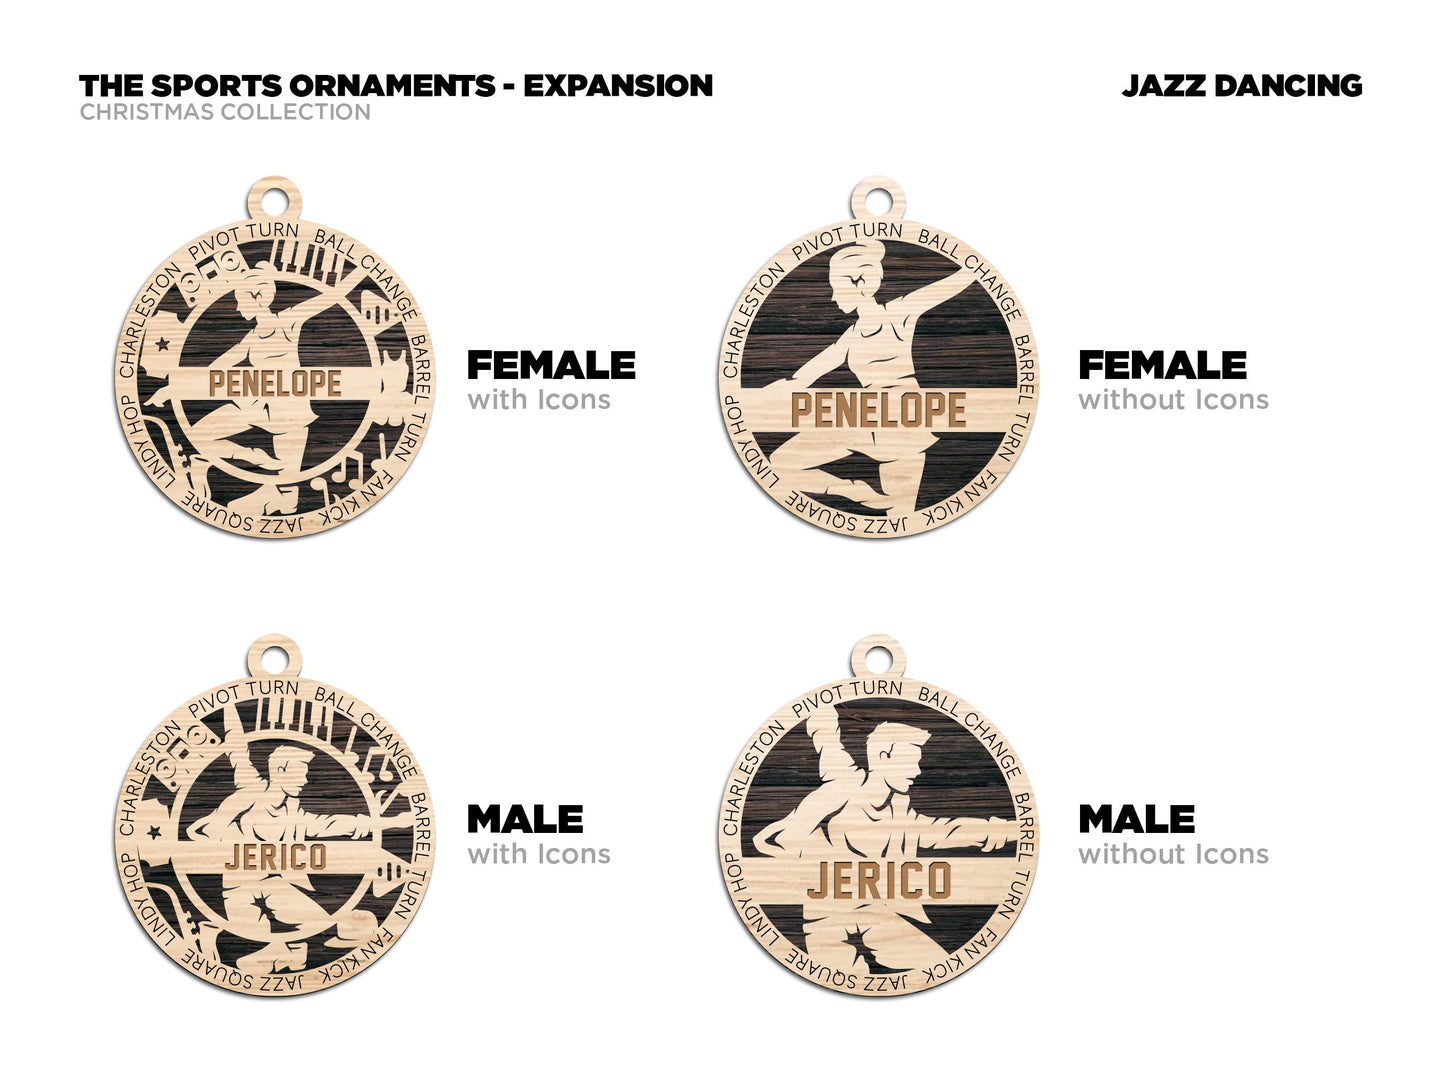 Dance Jazz - Stadium Series Ornaments - 4 Unique designs - SVG, PDF, AI File Download - Sized for Glowforge